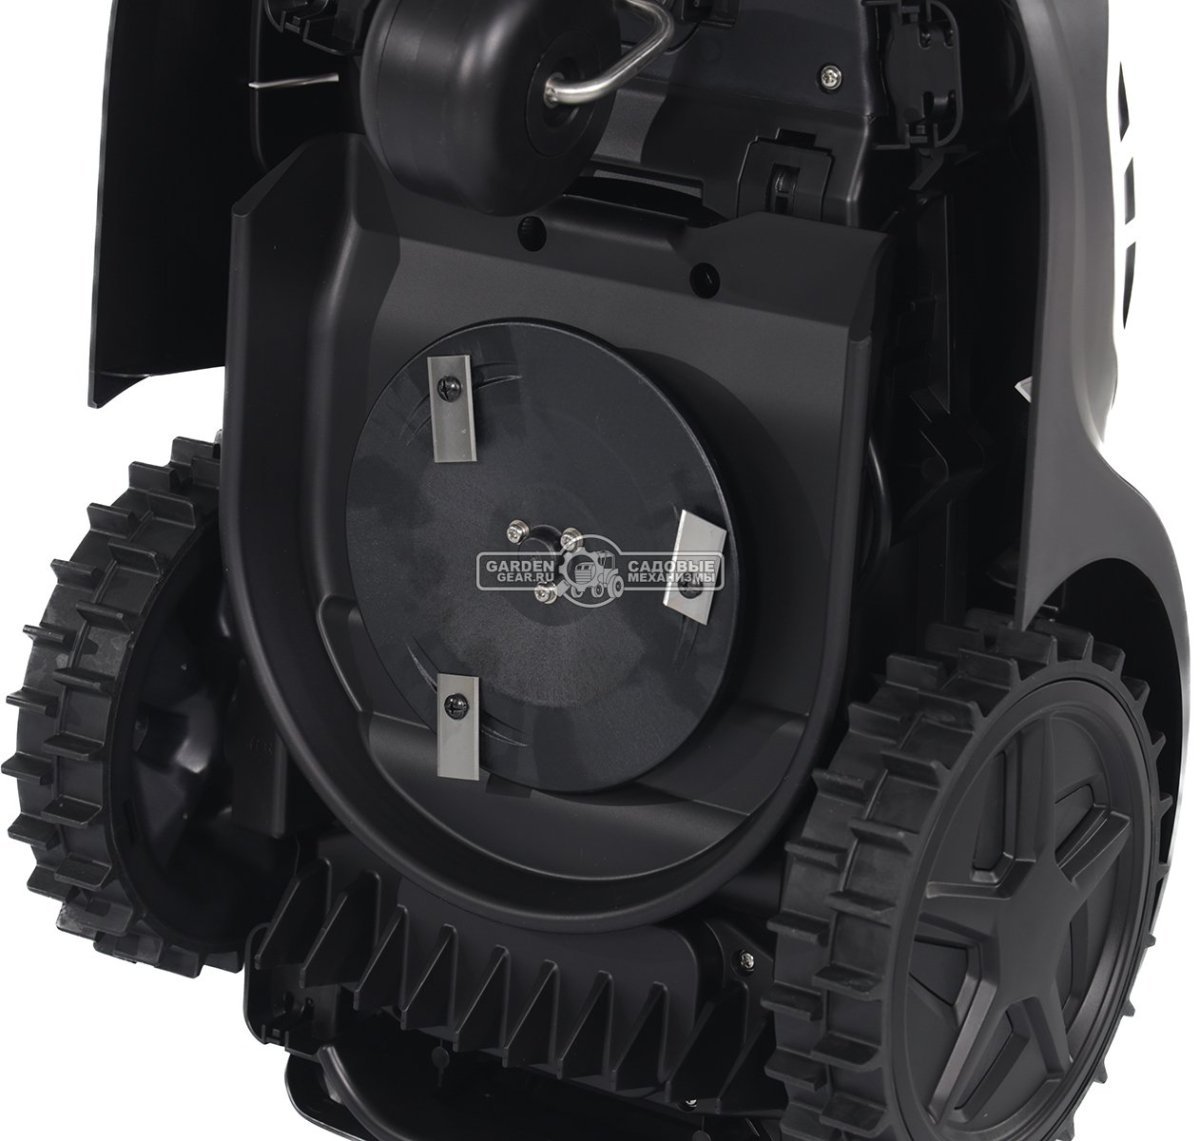 Газонокосилка робот ZimAni Automower 105 (площадь газона до 500 м2) датчик удара + противоударный бампер, Wi-Fi / Bluetooth, датчик дождя